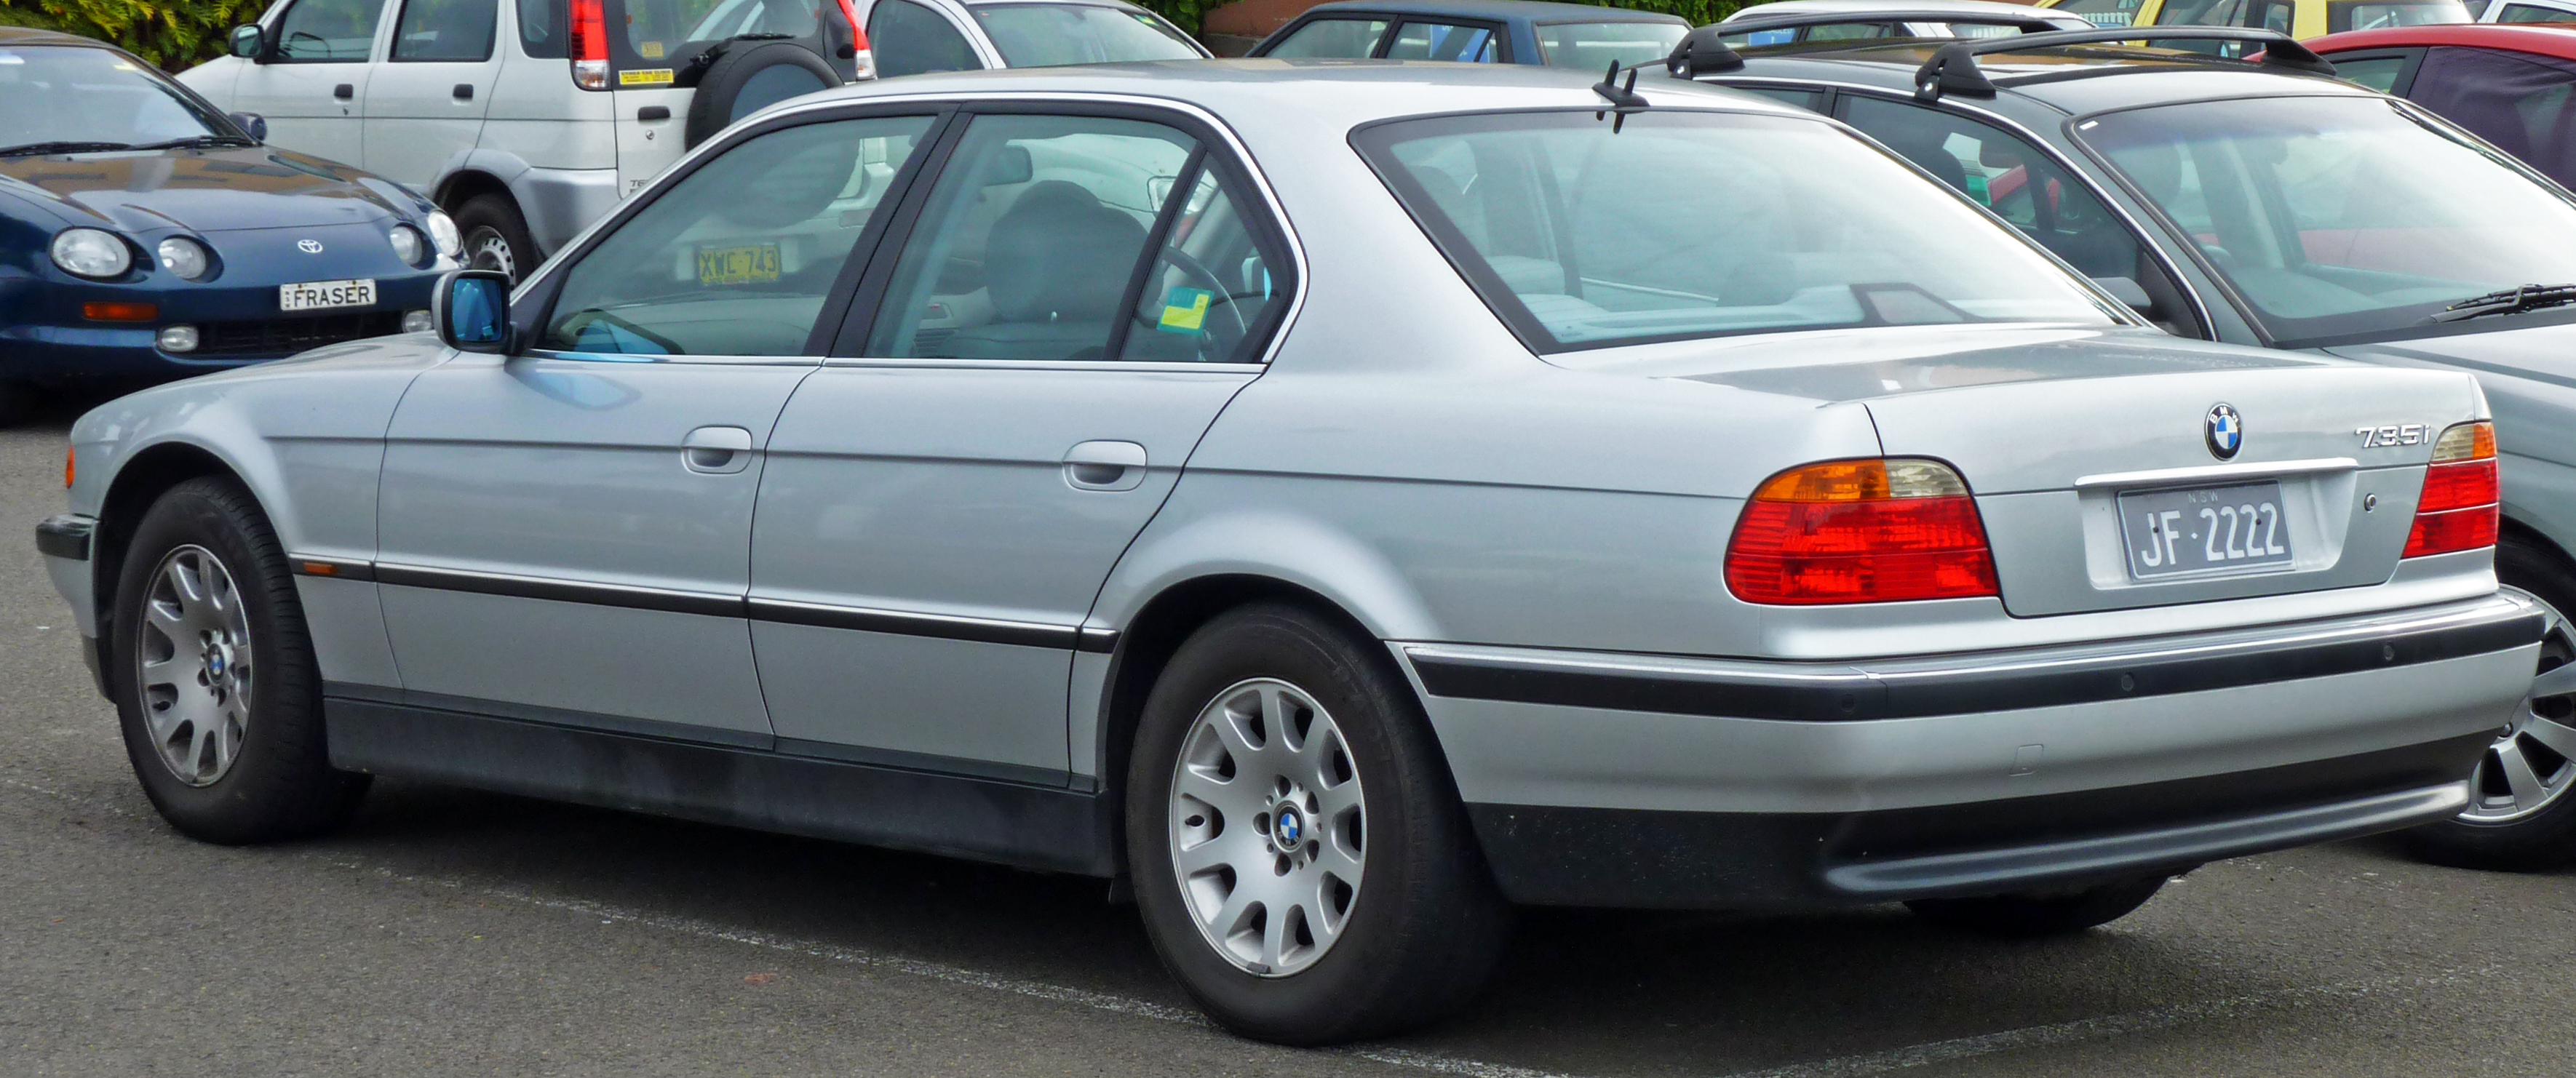 File:1998-2000 BMW 735i (E38) sedan 02.jpg - Wikimedia Commons